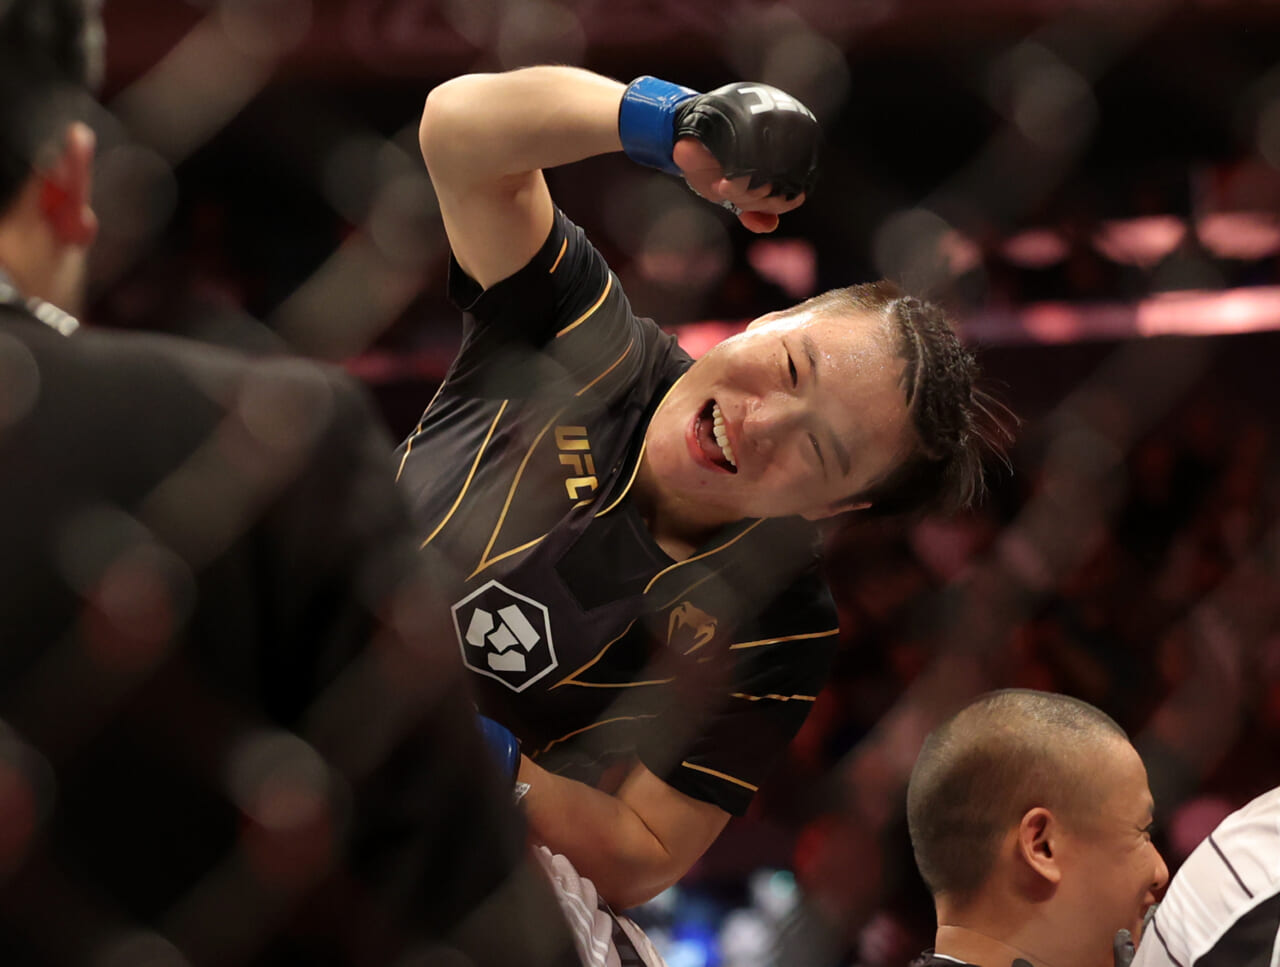 Zhang Weili – Yan Xiaonan for the strawweight title announced for UFC 300